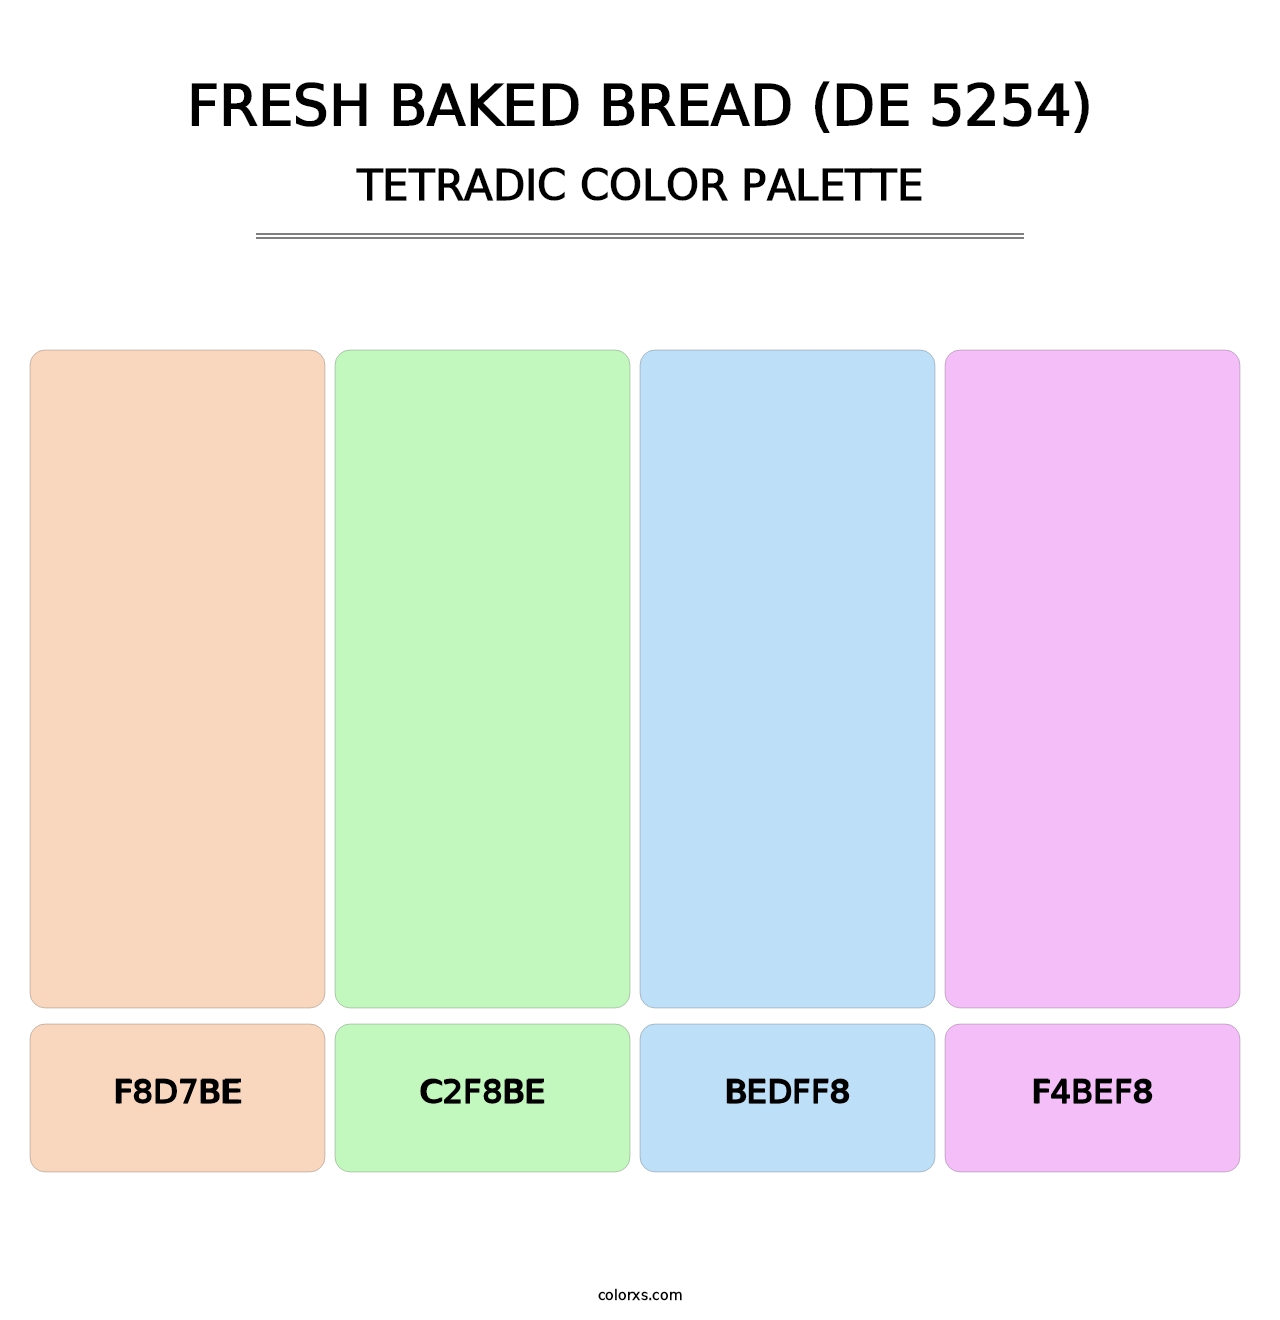 Fresh Baked Bread (DE 5254) - Tetradic Color Palette